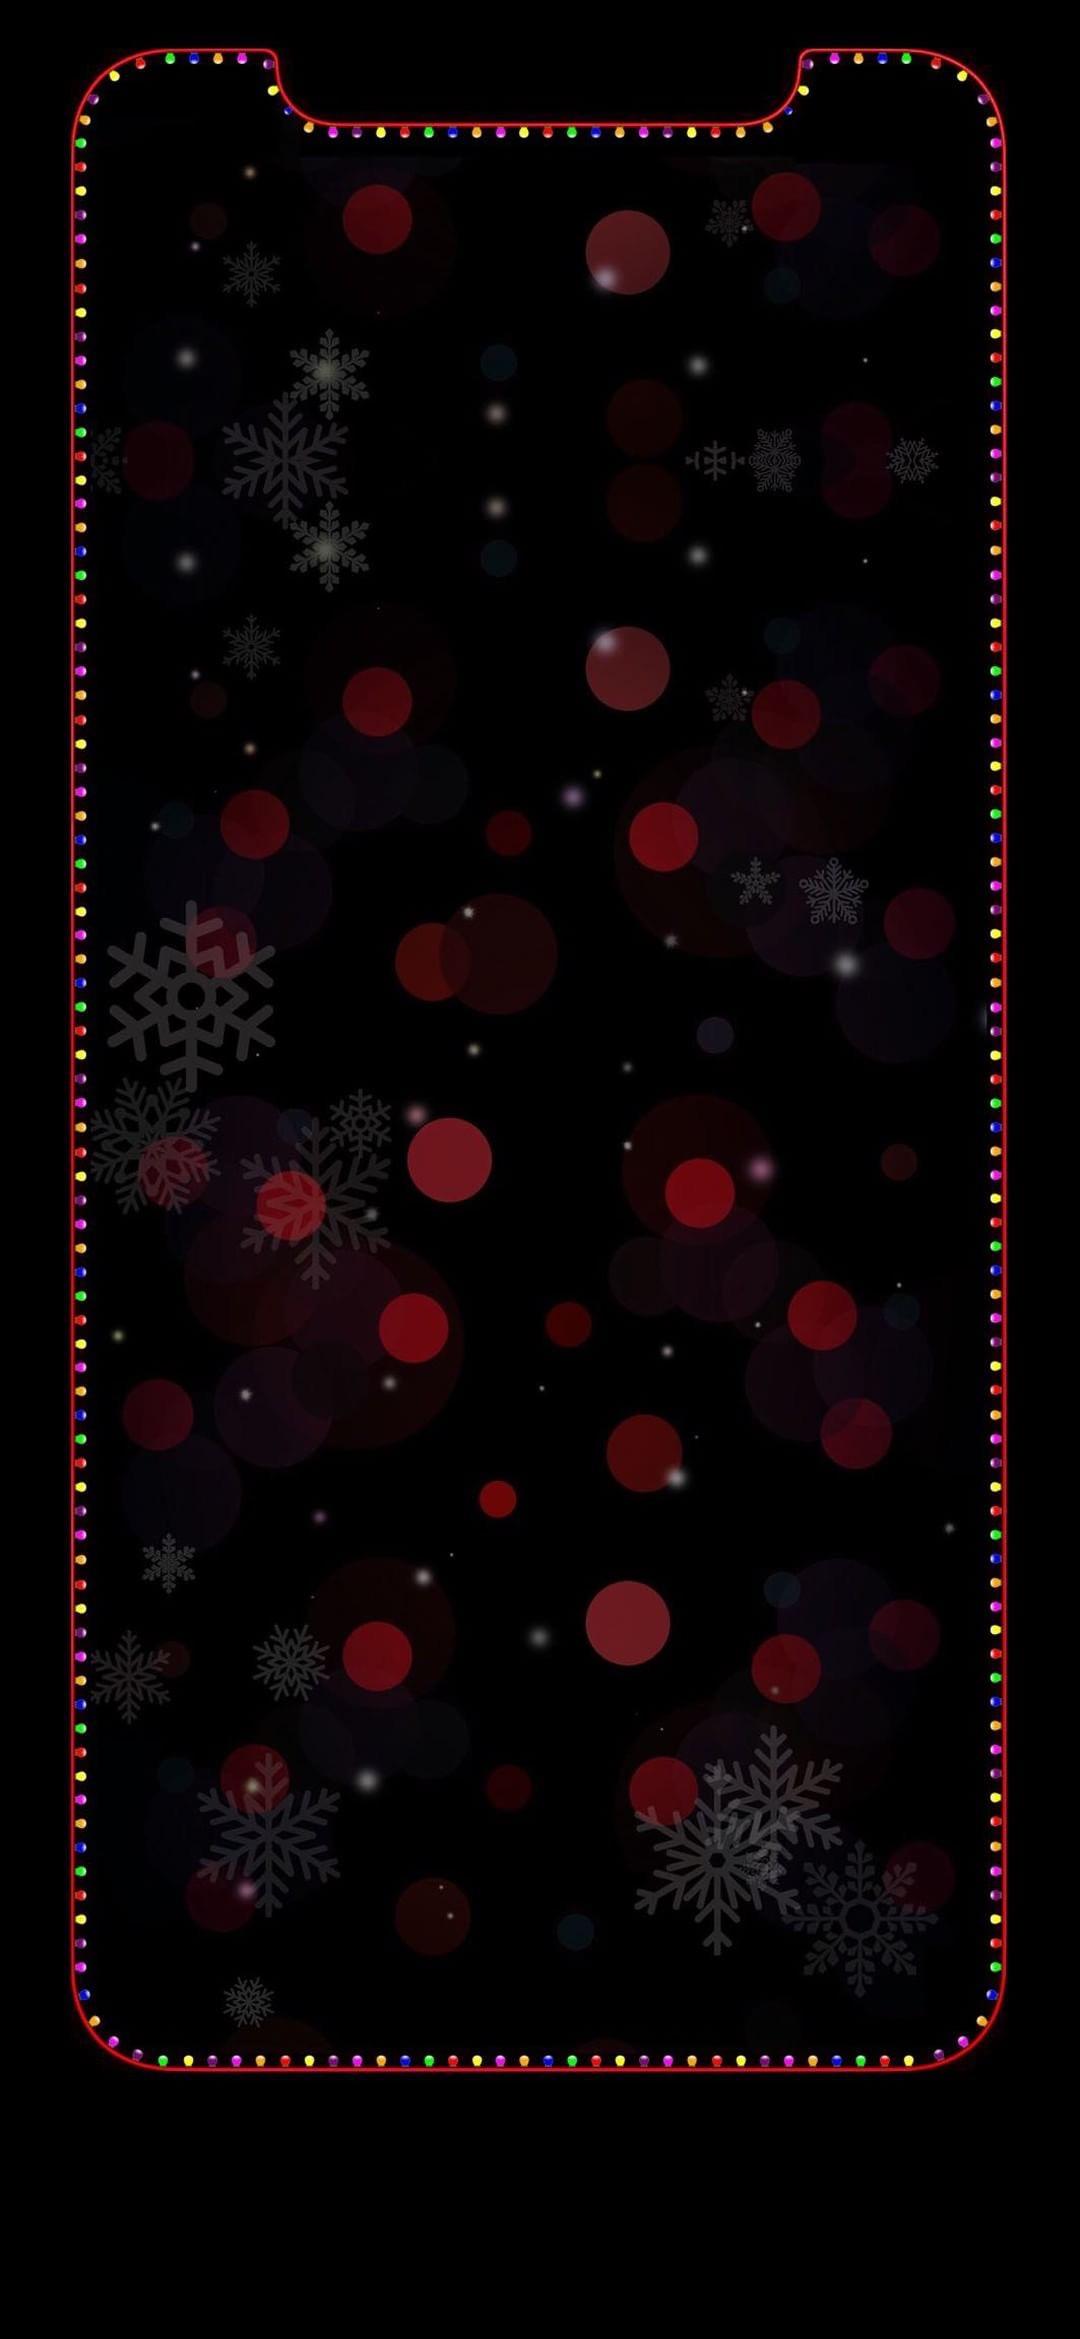 iPhone X Christmas Wallpaper Forums